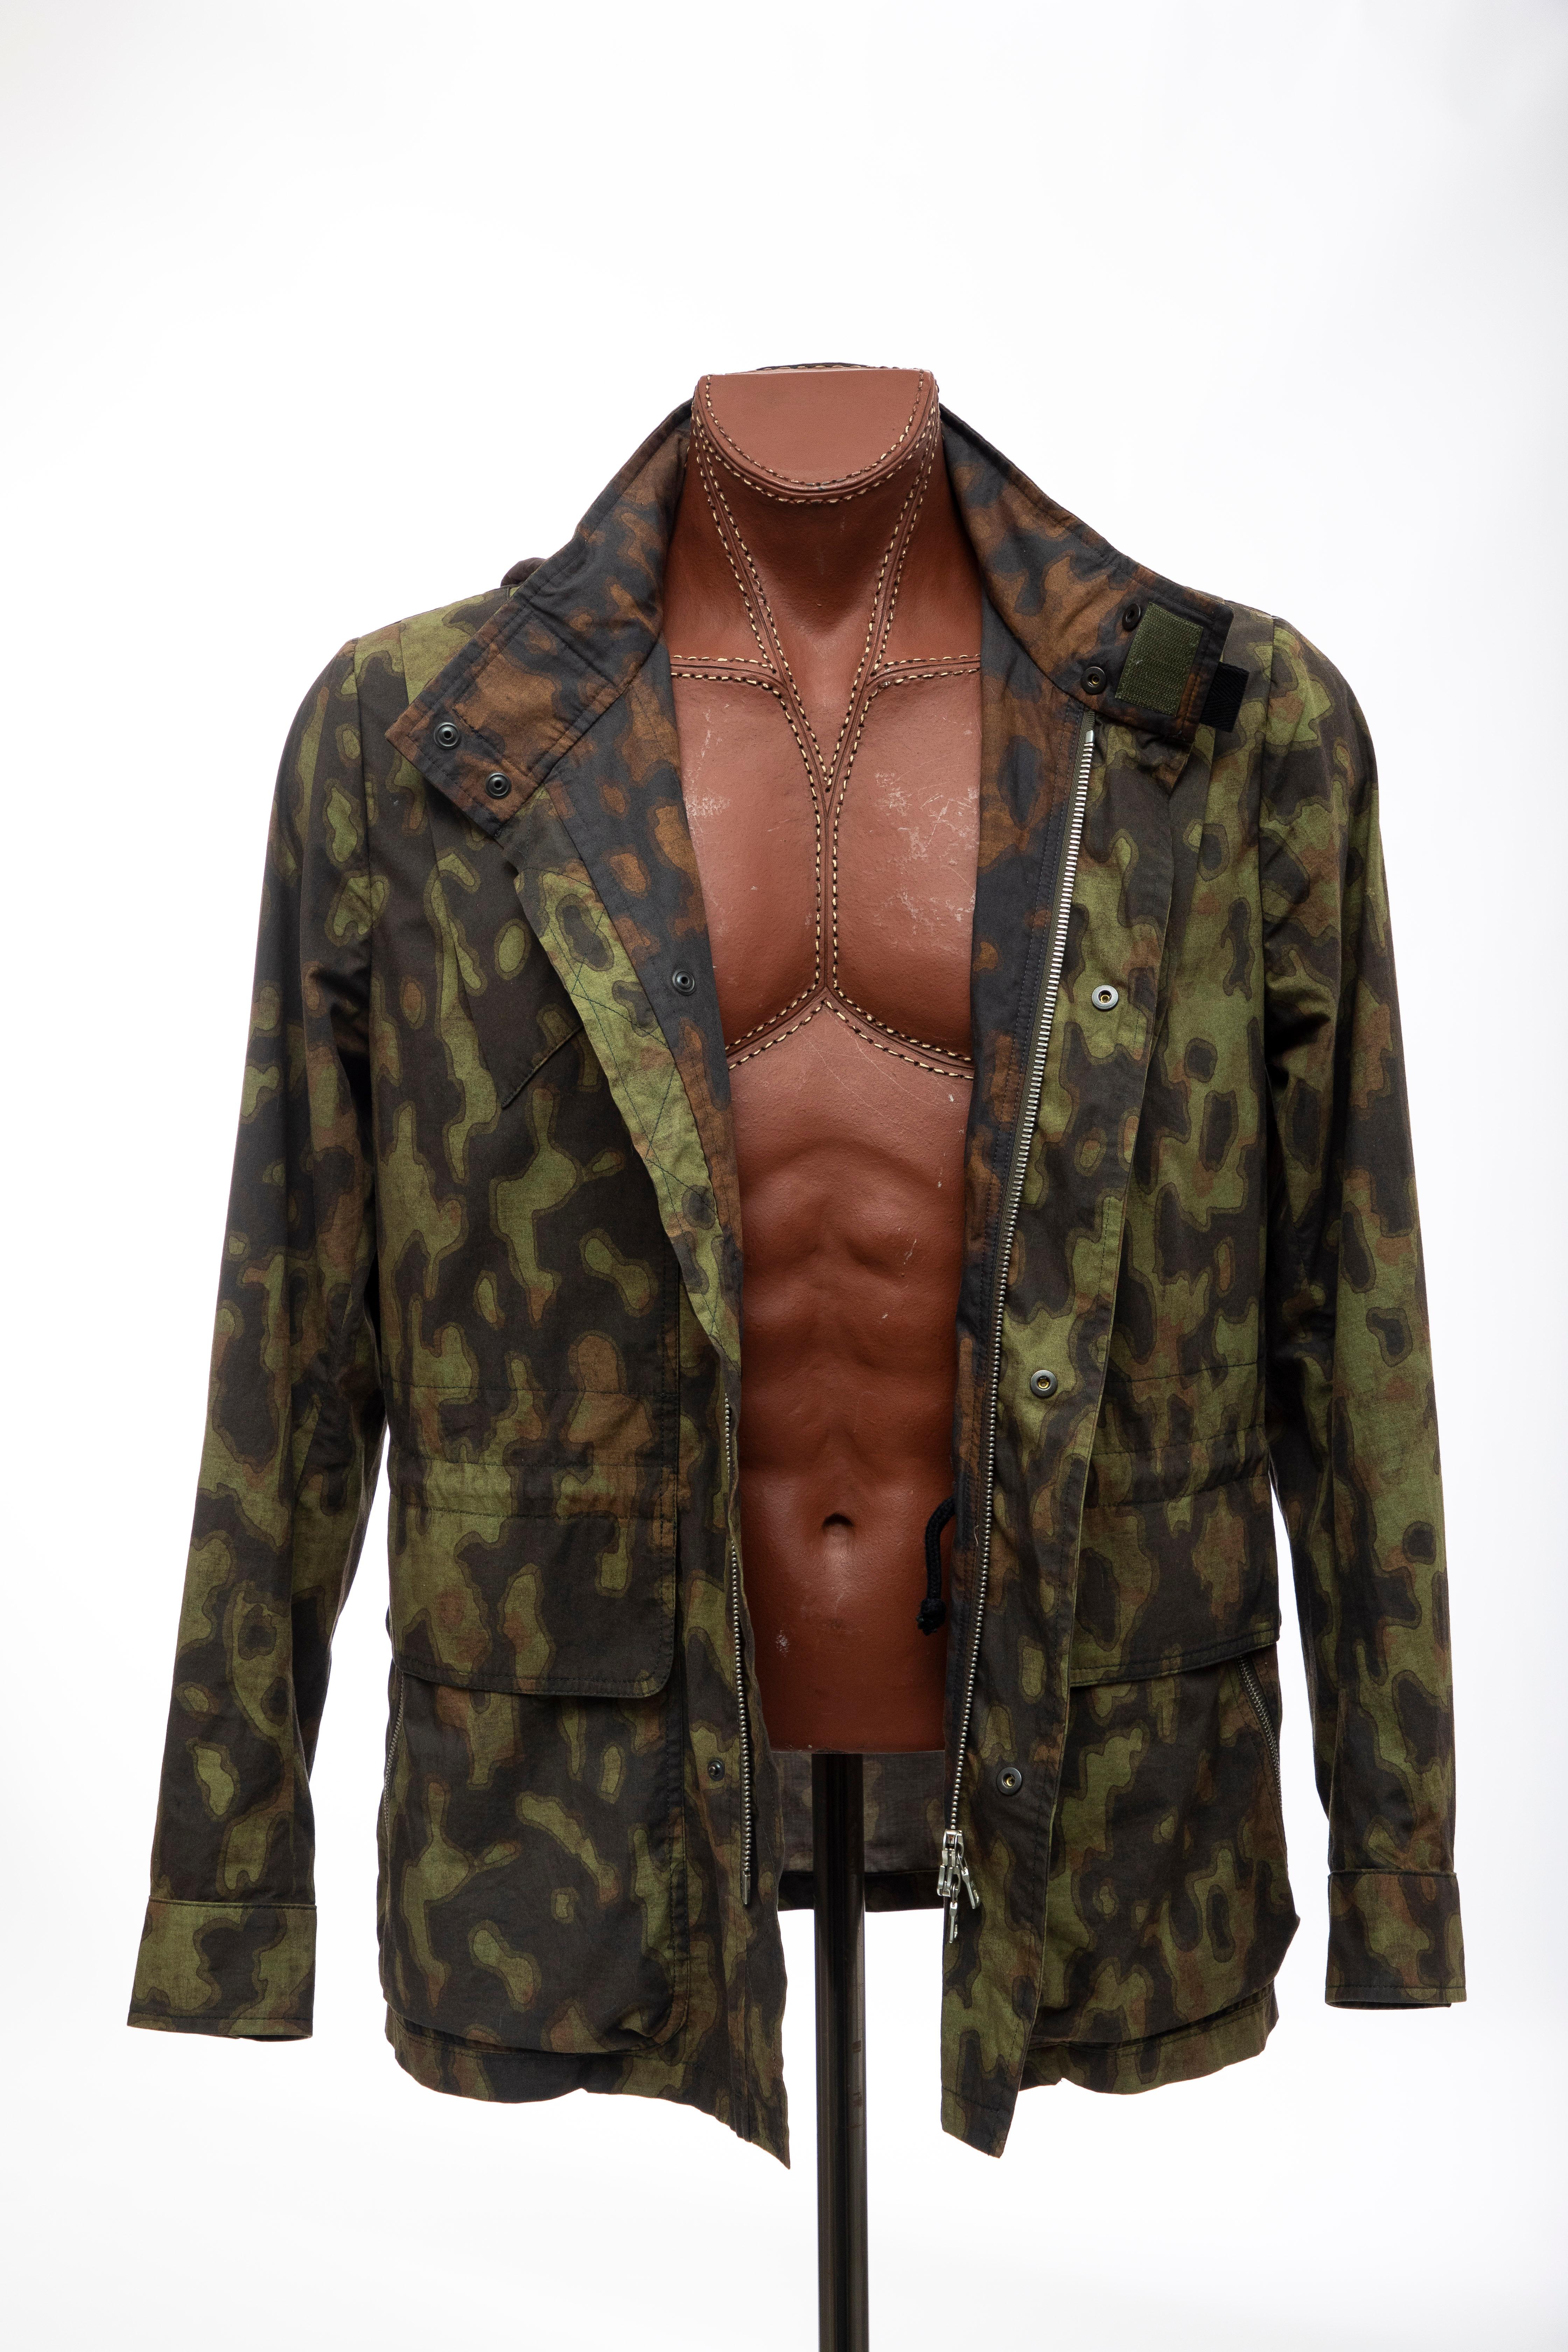 Dries Van Noten Men's Cotton Camouflage Jacket, Spring 2013 For Sale 10